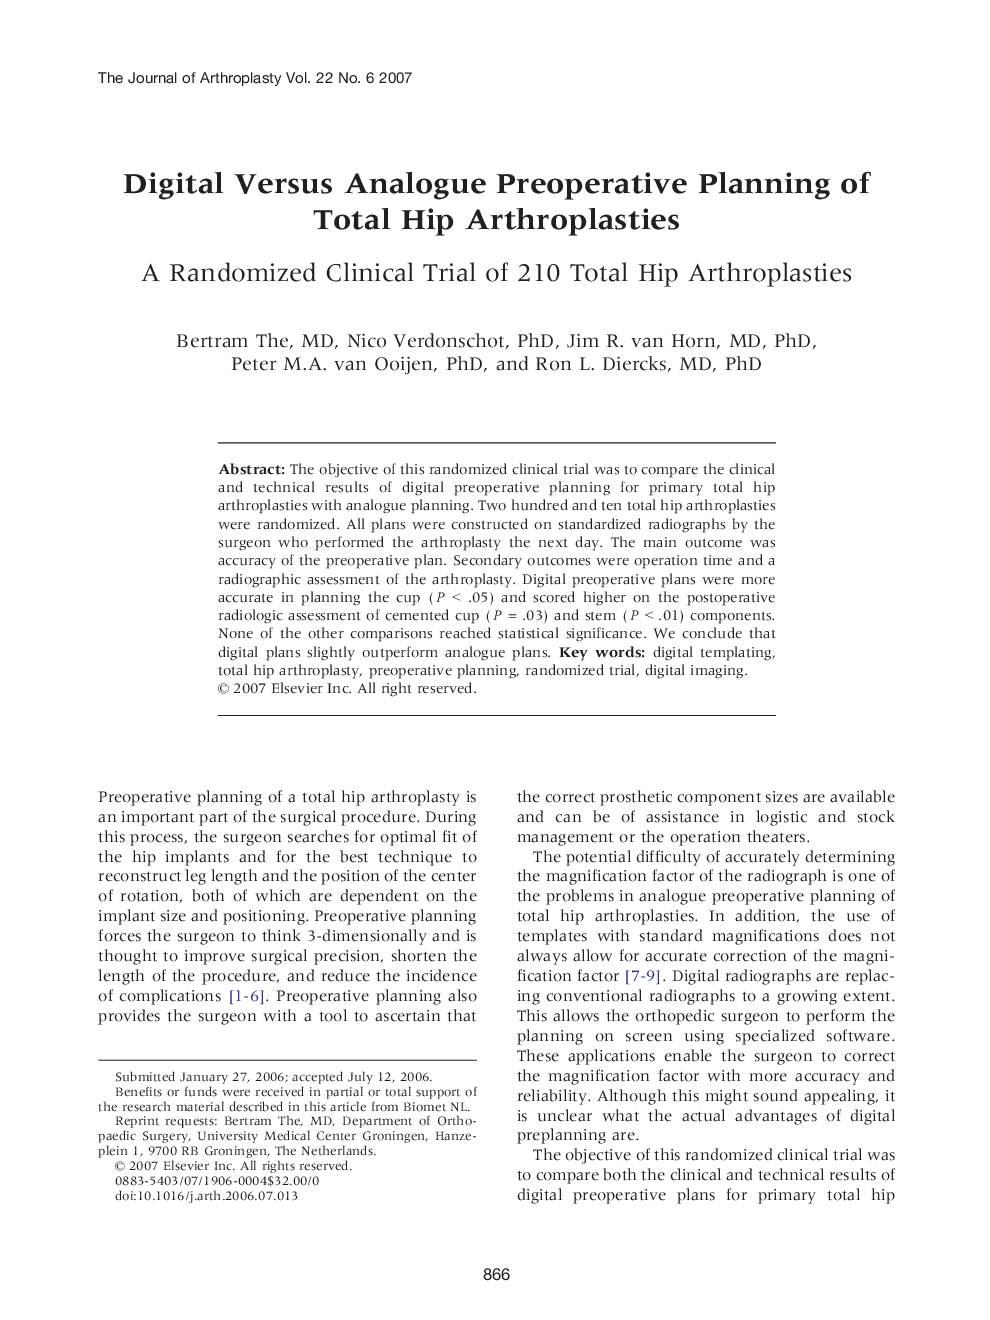 Digital Versus Analogue Preoperative Planning of Total Hip Arthroplasties : A Randomized Clinical Trial of 210 Total Hip Arthroplasties